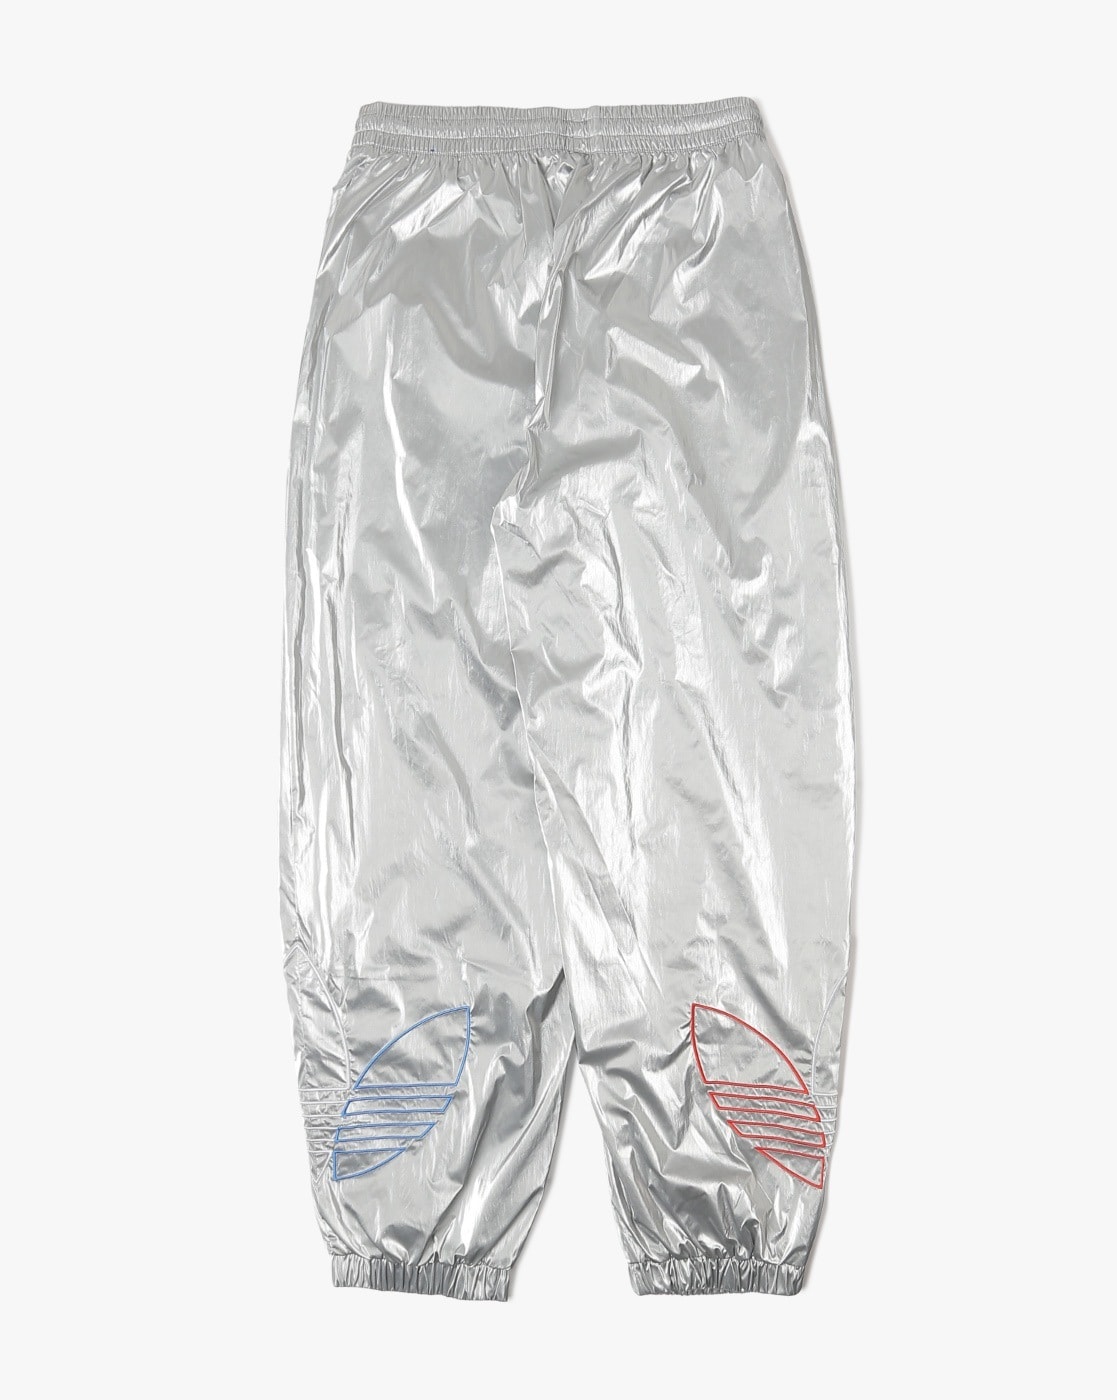 Adidas Silver Metallic Silky Tear Away Pants Size XL | eBay